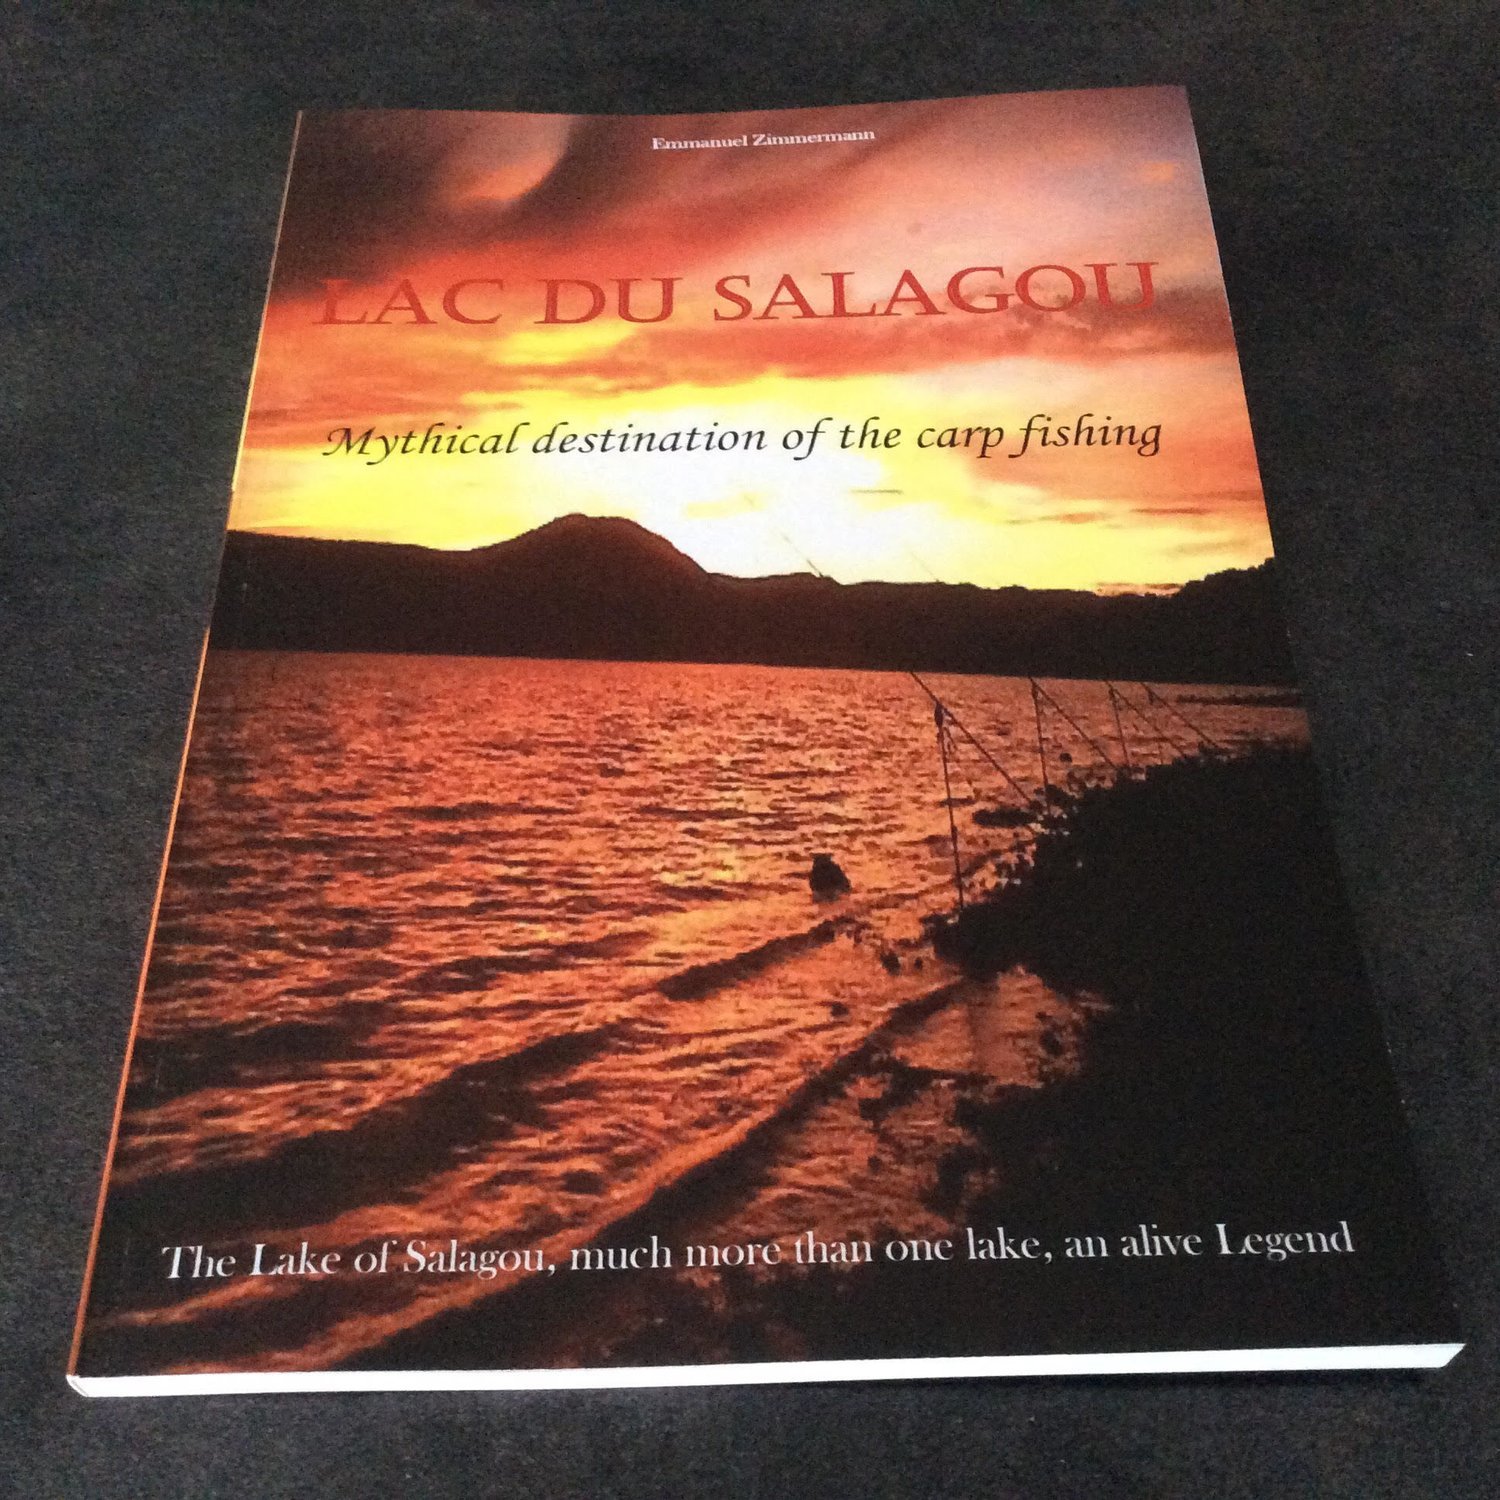 Lac du Salagou - Mythical of destination of the carp fishing